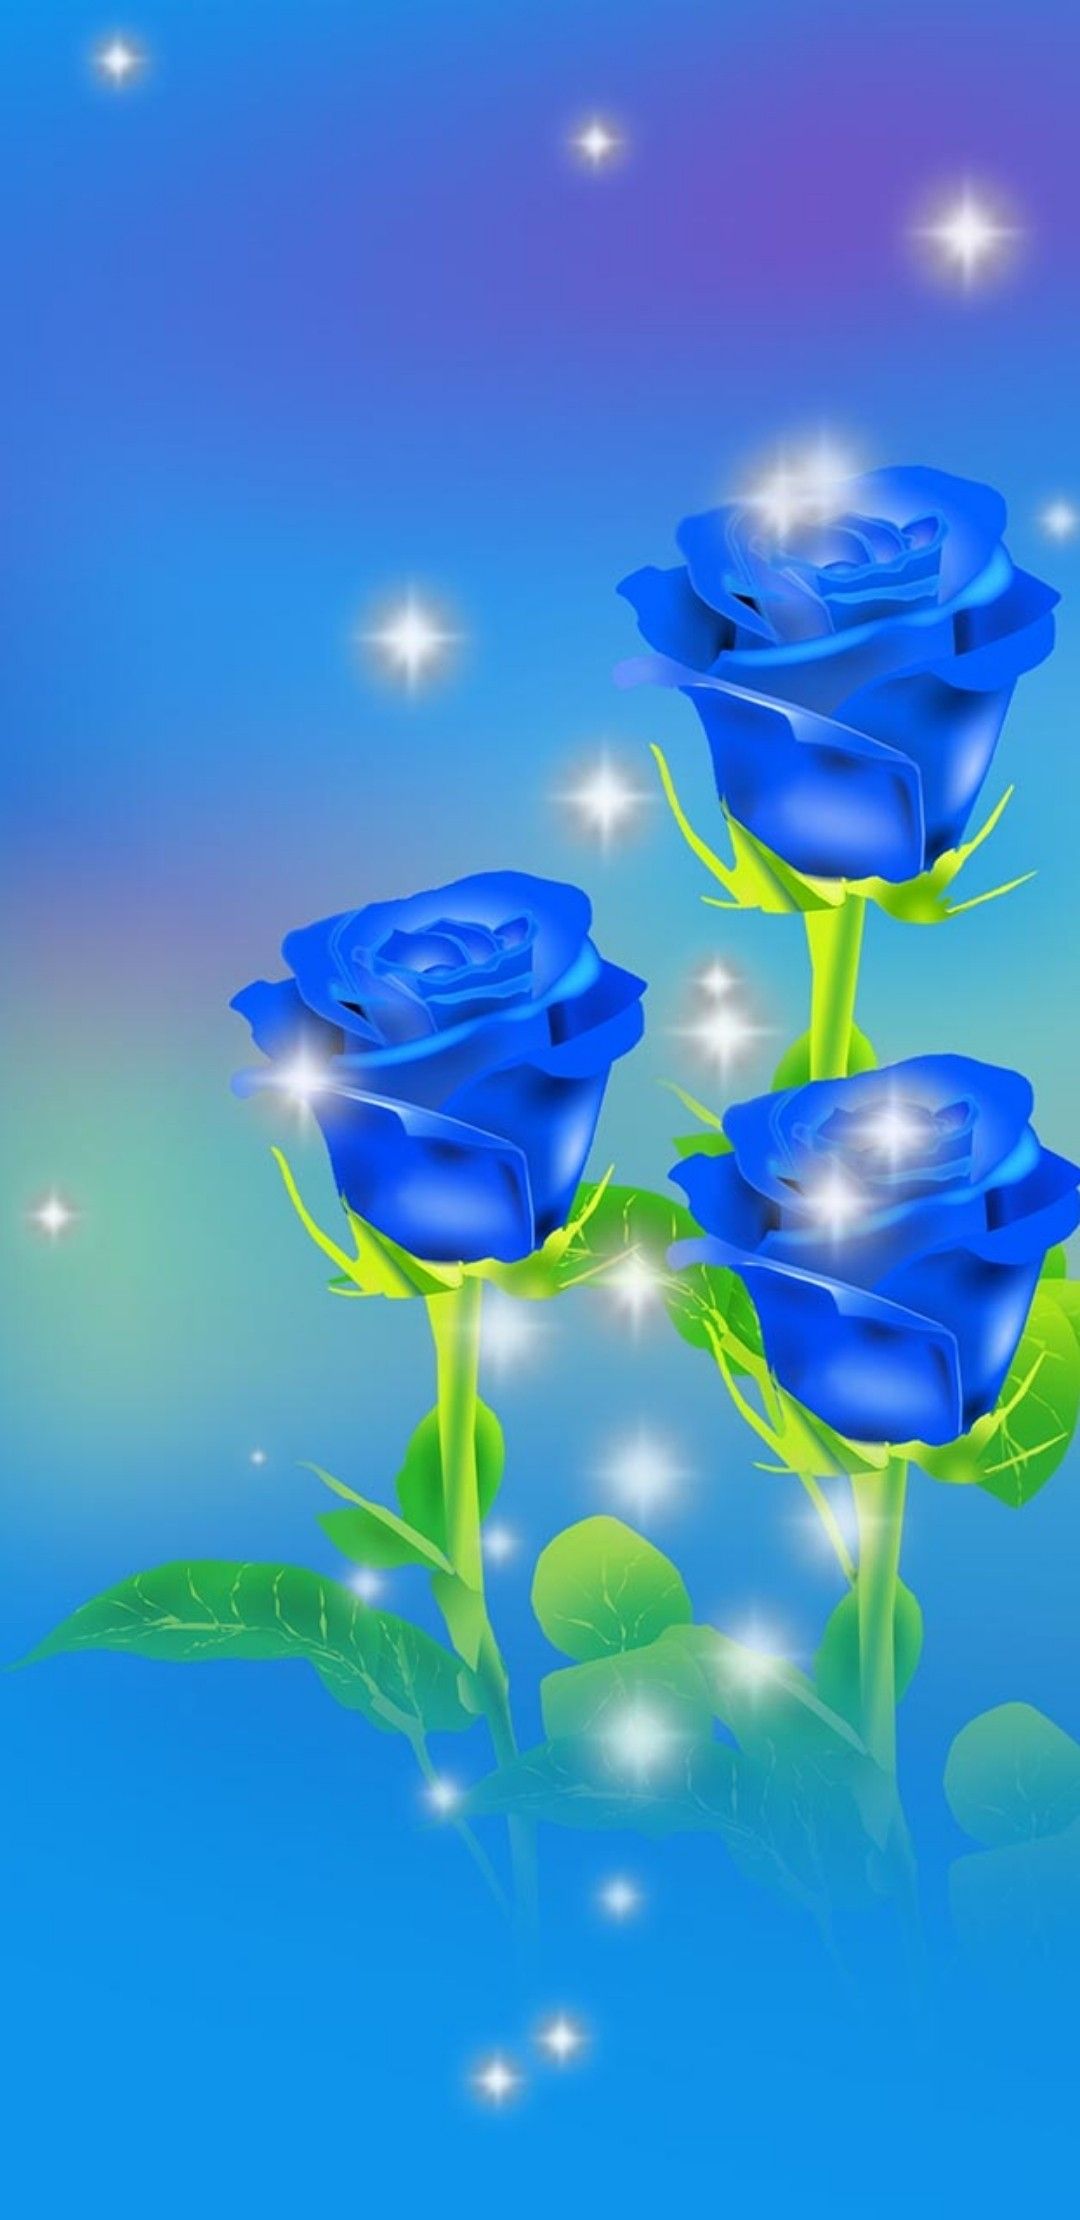 bellas imágenes de rosas para fondo de pantalla,azul,rosa azul,agua,flor,rosa